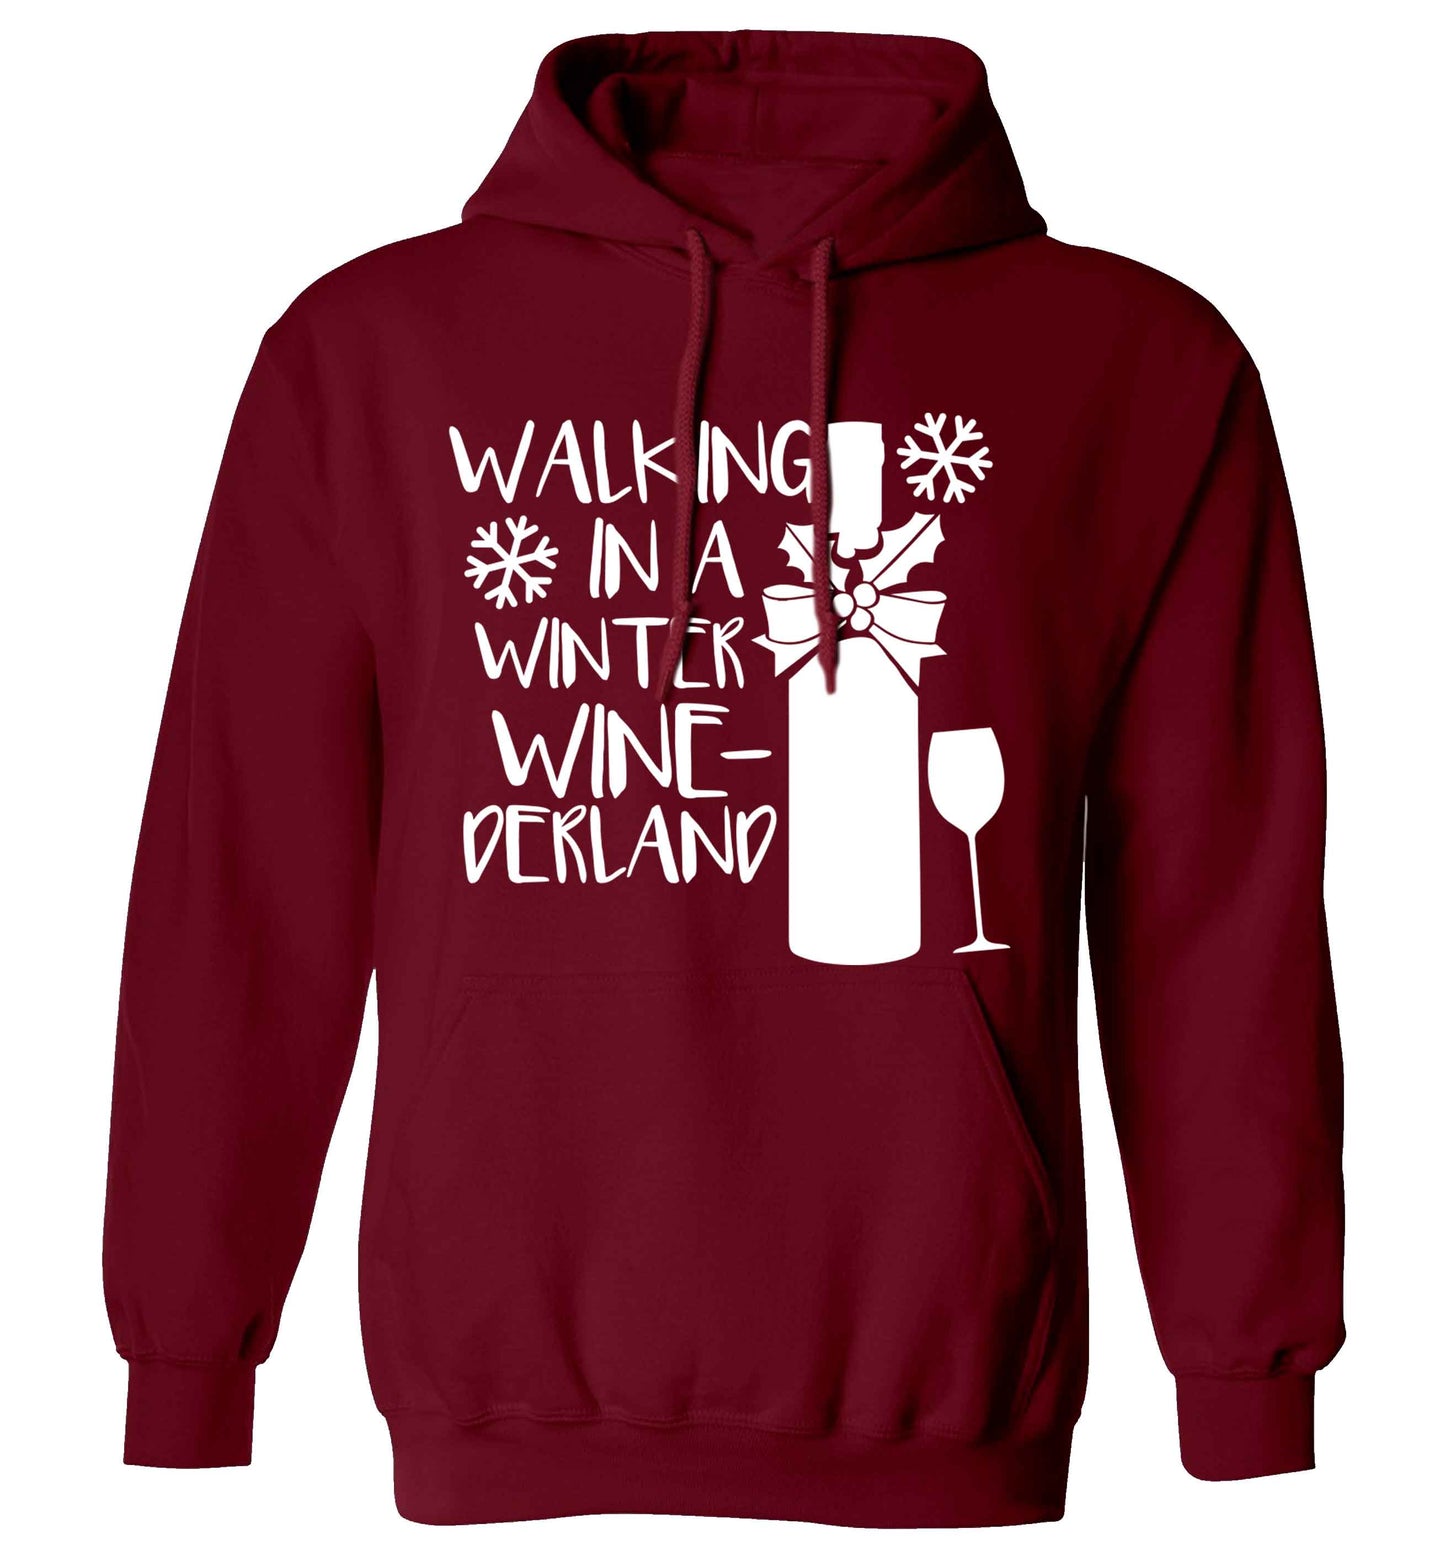 Walking in a wine-derwonderland adults unisex maroon hoodie 2XL